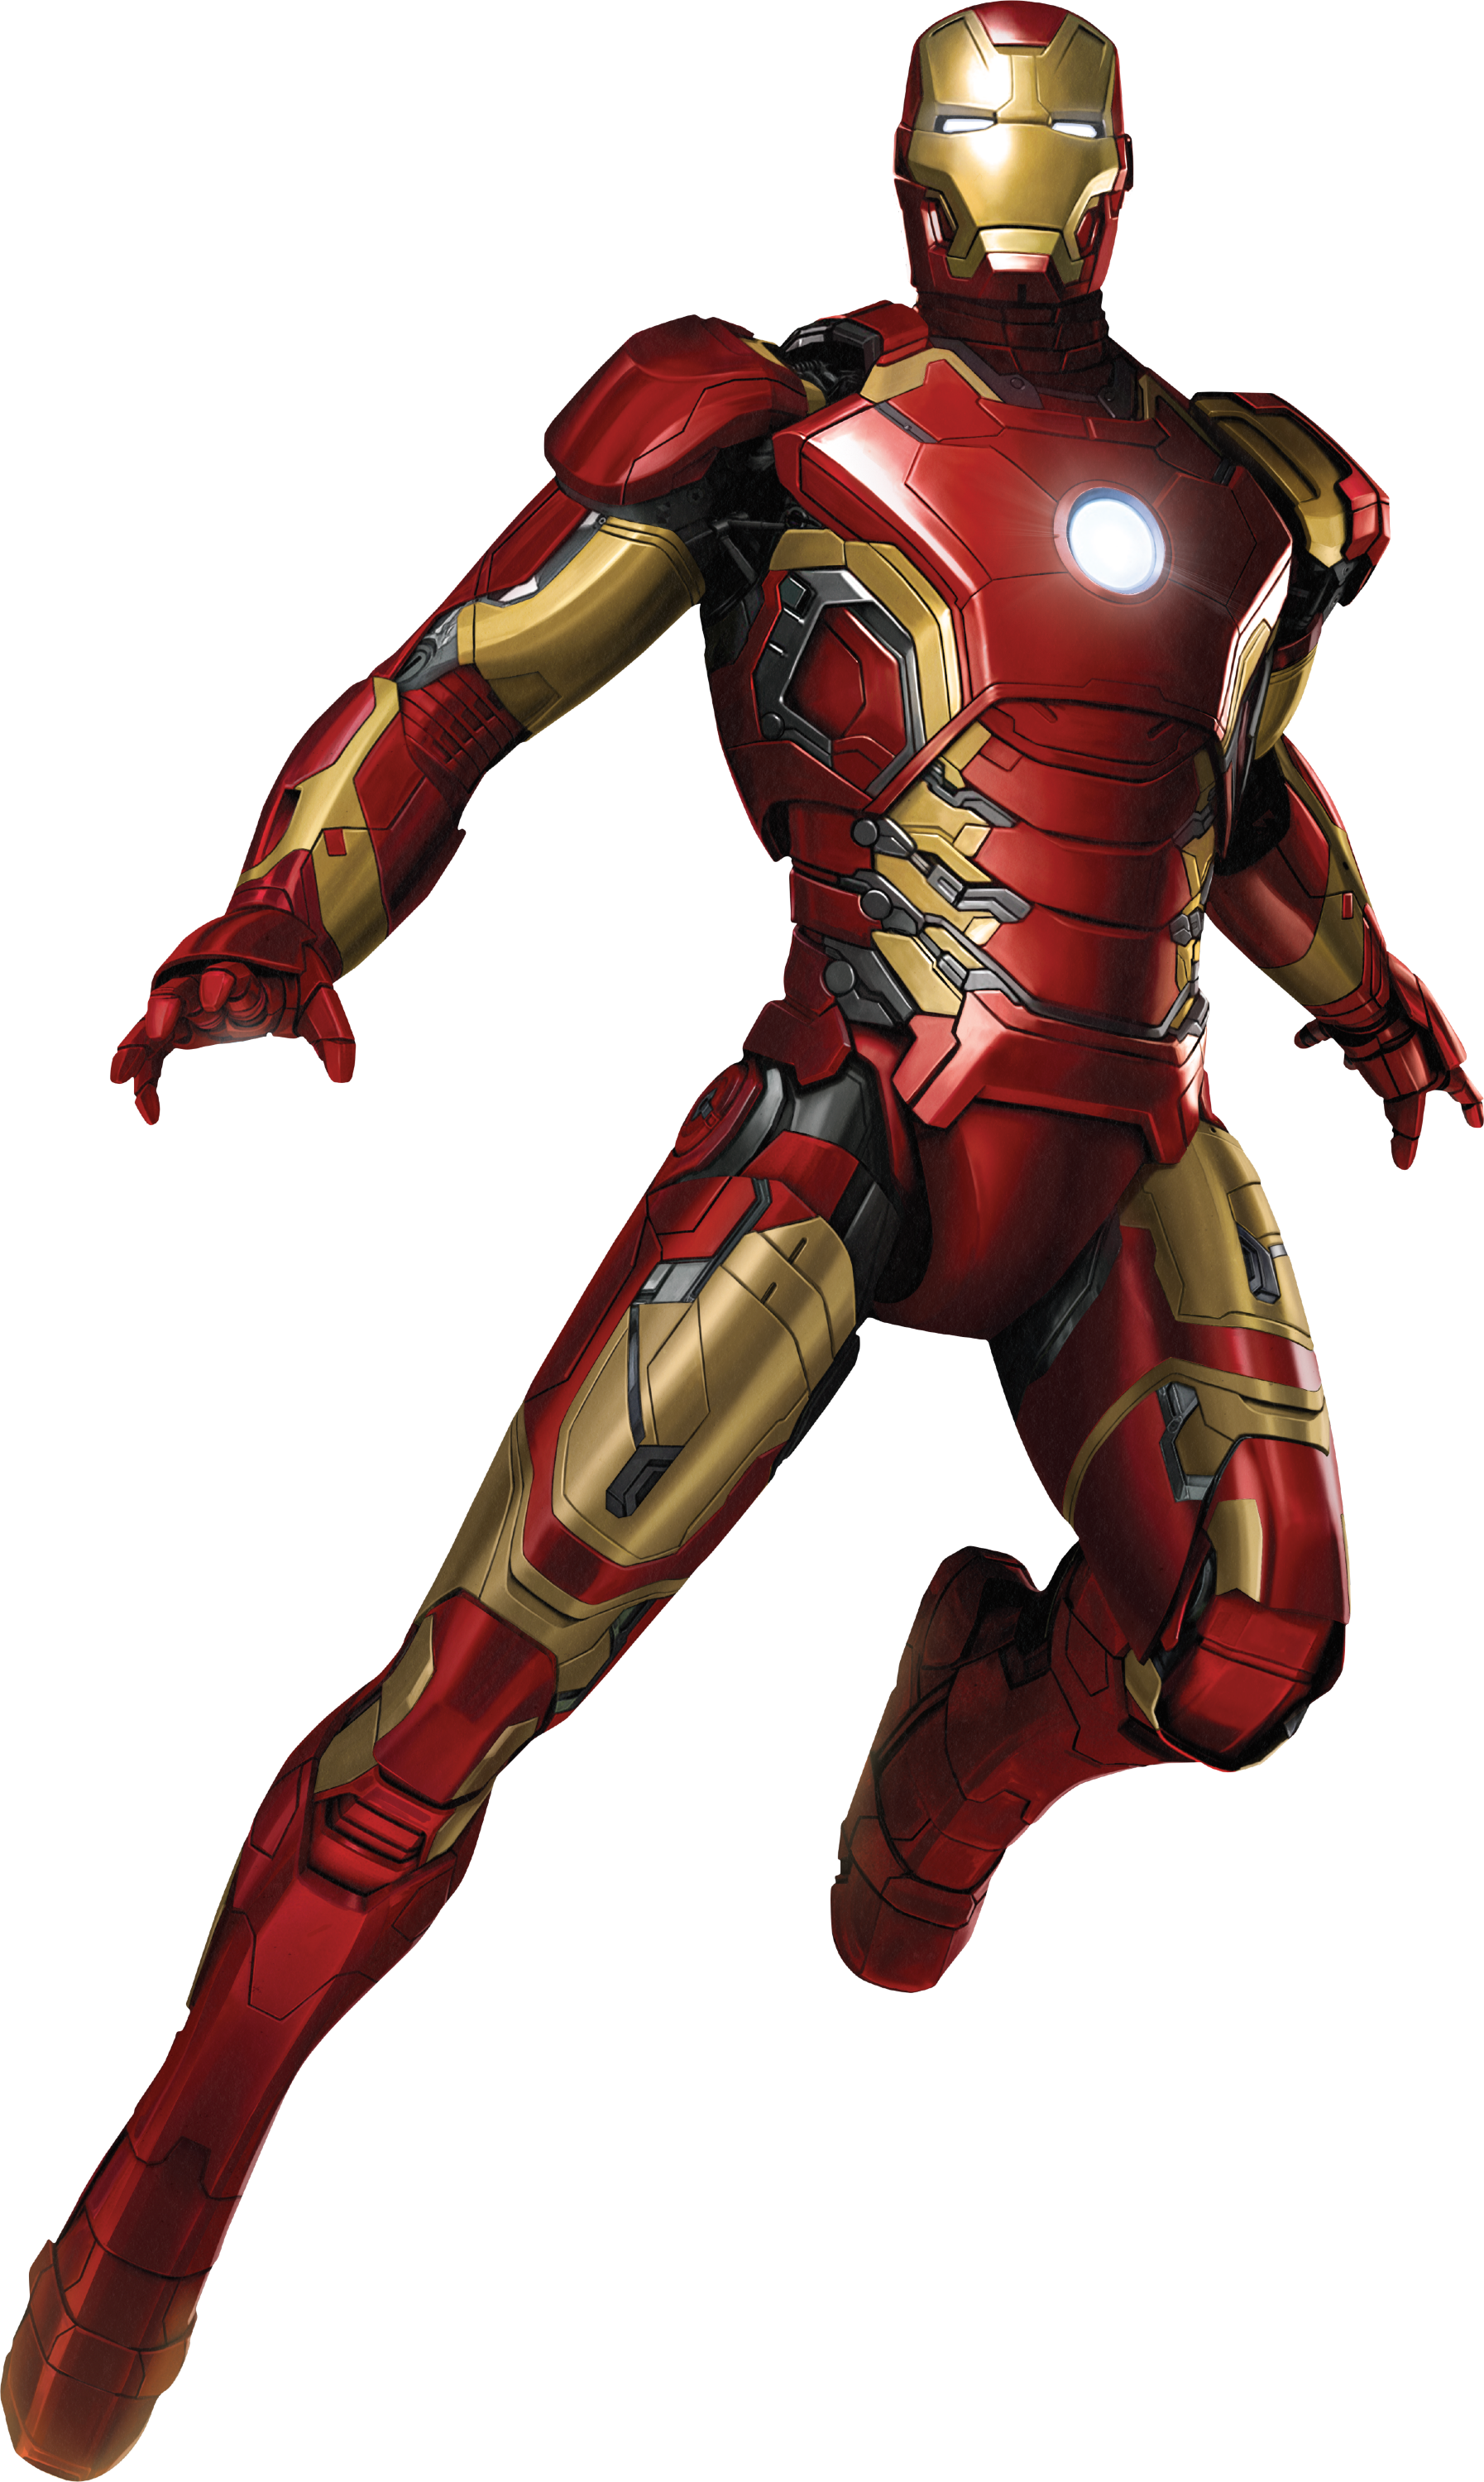 Flying Avengers Iron Man Download Free Image PNG Image